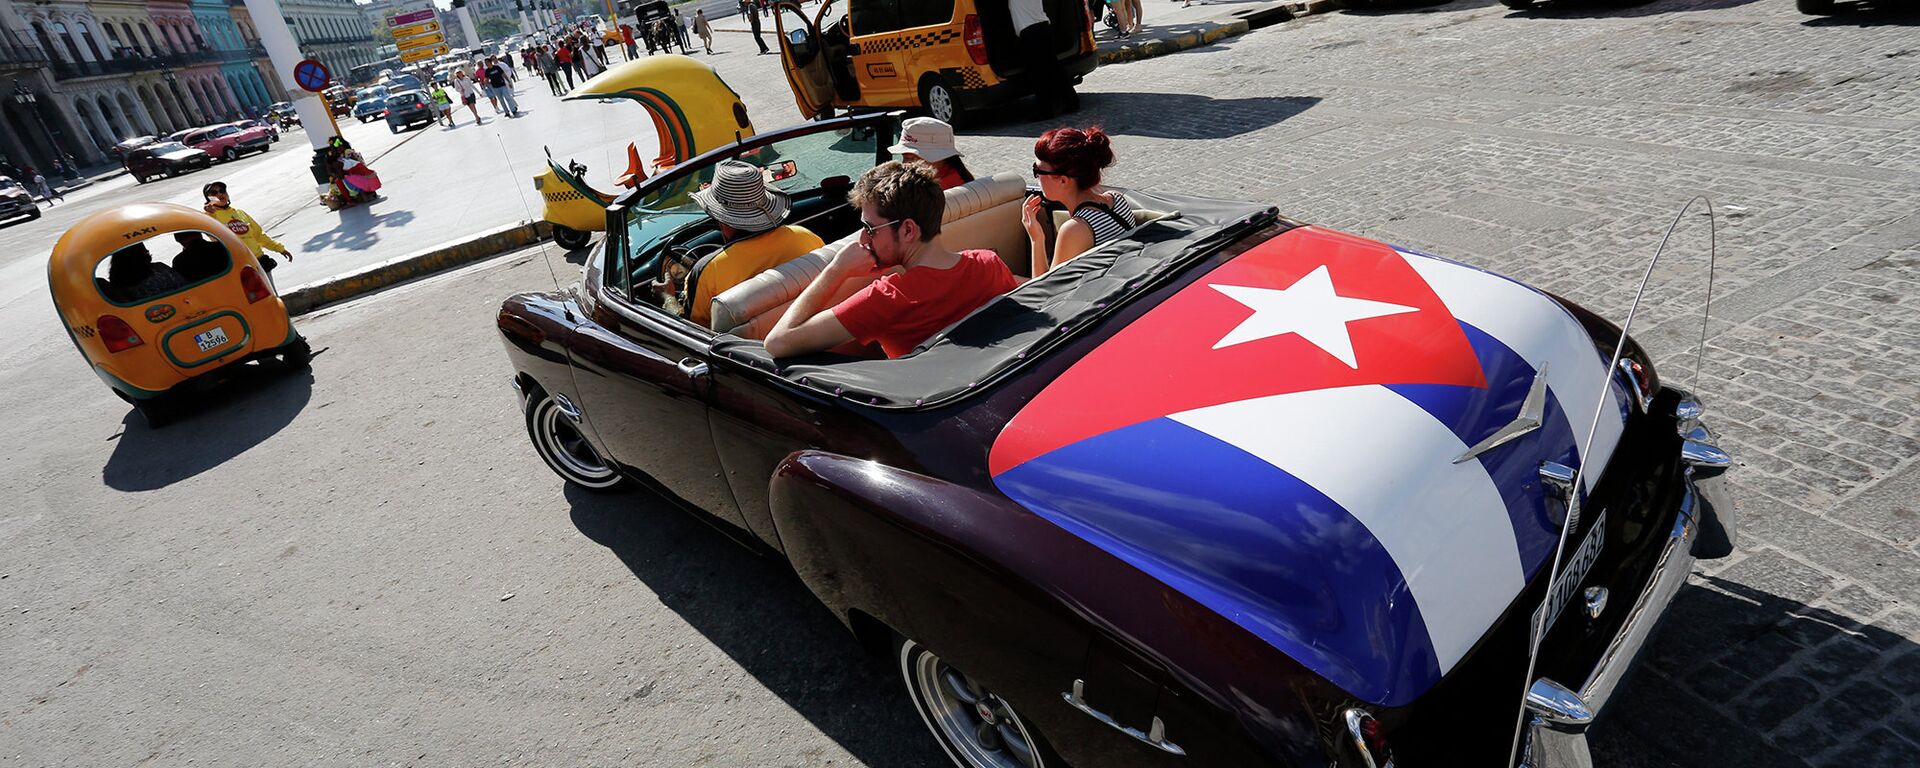 Turistas en Cuba - Sputnik Mundo, 1920, 27.07.2022